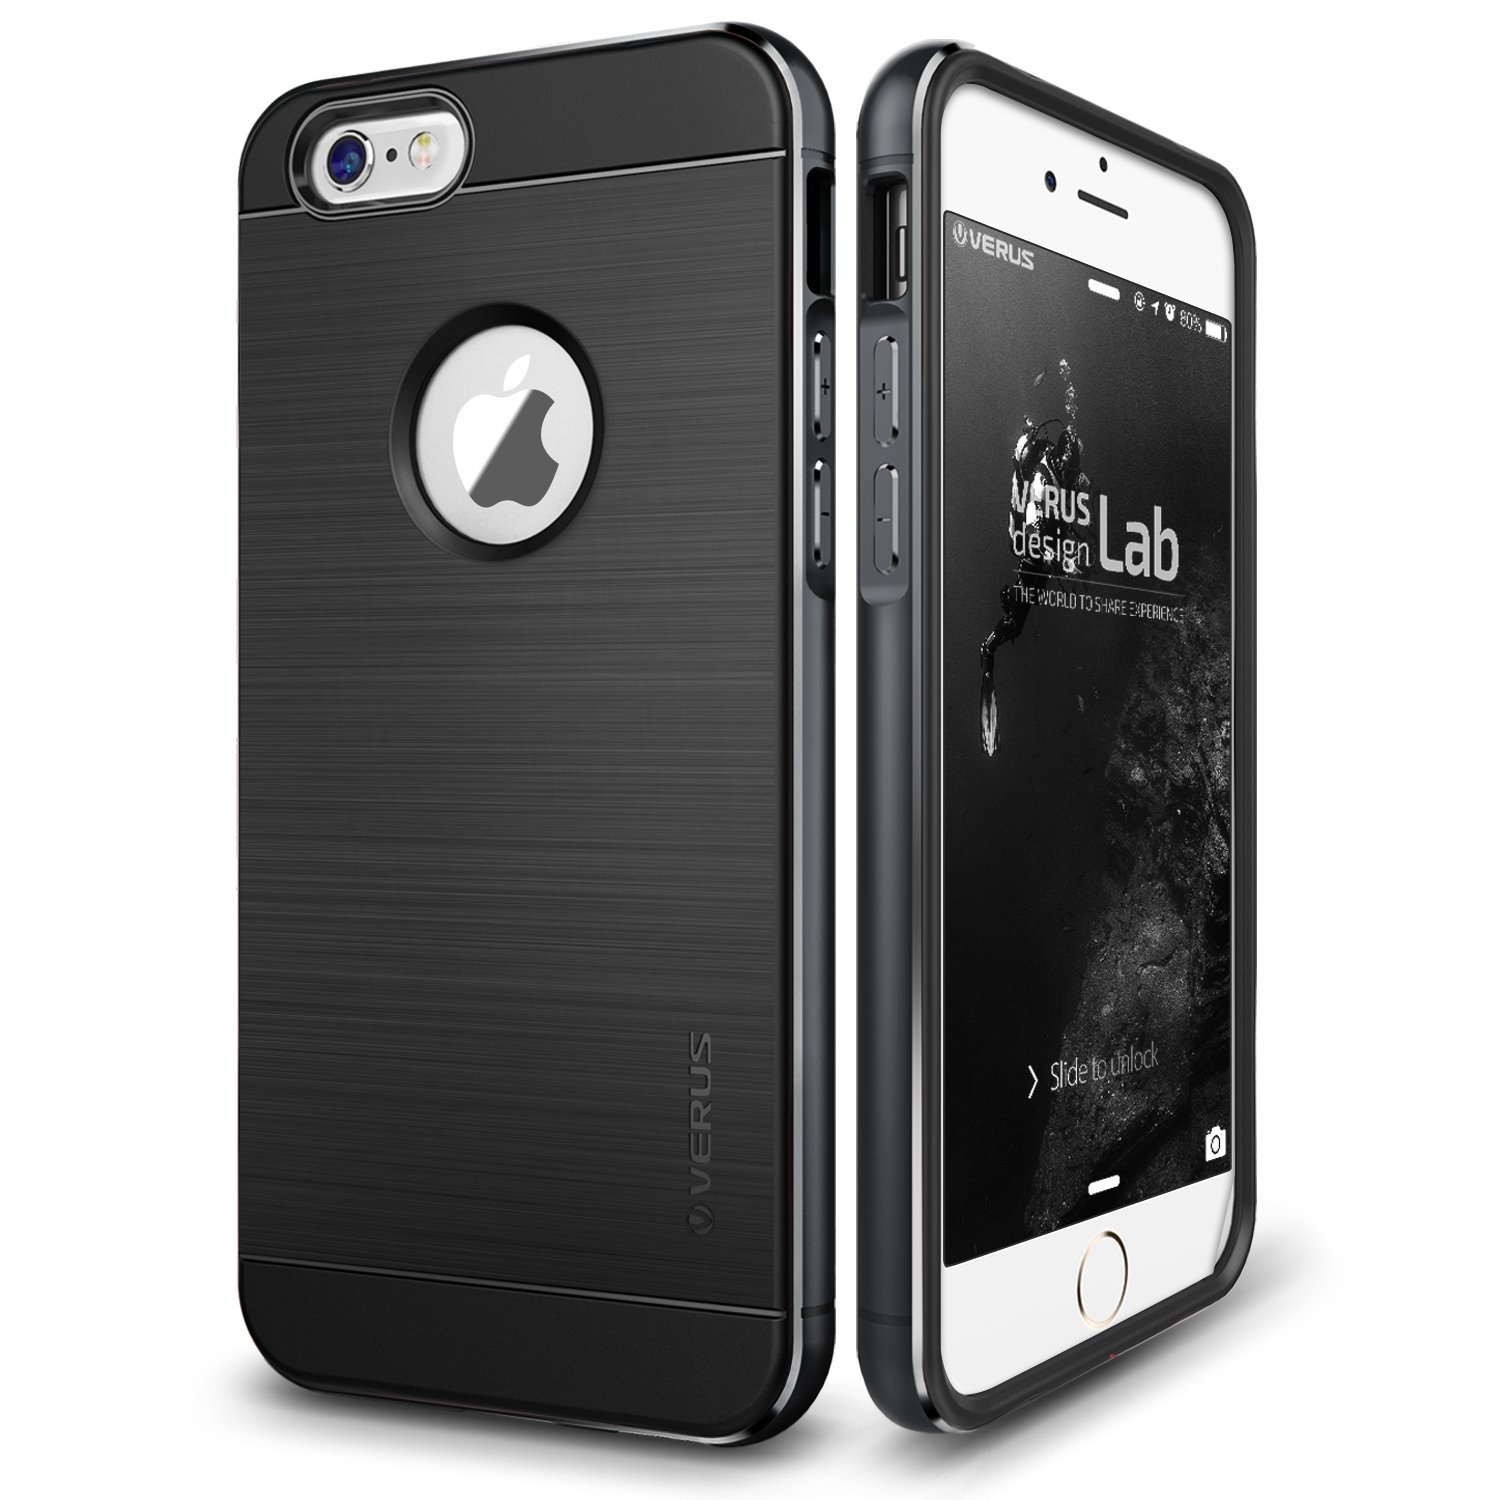 Verus блоггер. Common Shield Case для iphone. VRS Design 7+ чехол. Корпус iphone 6s хром. Commo shield для iphone